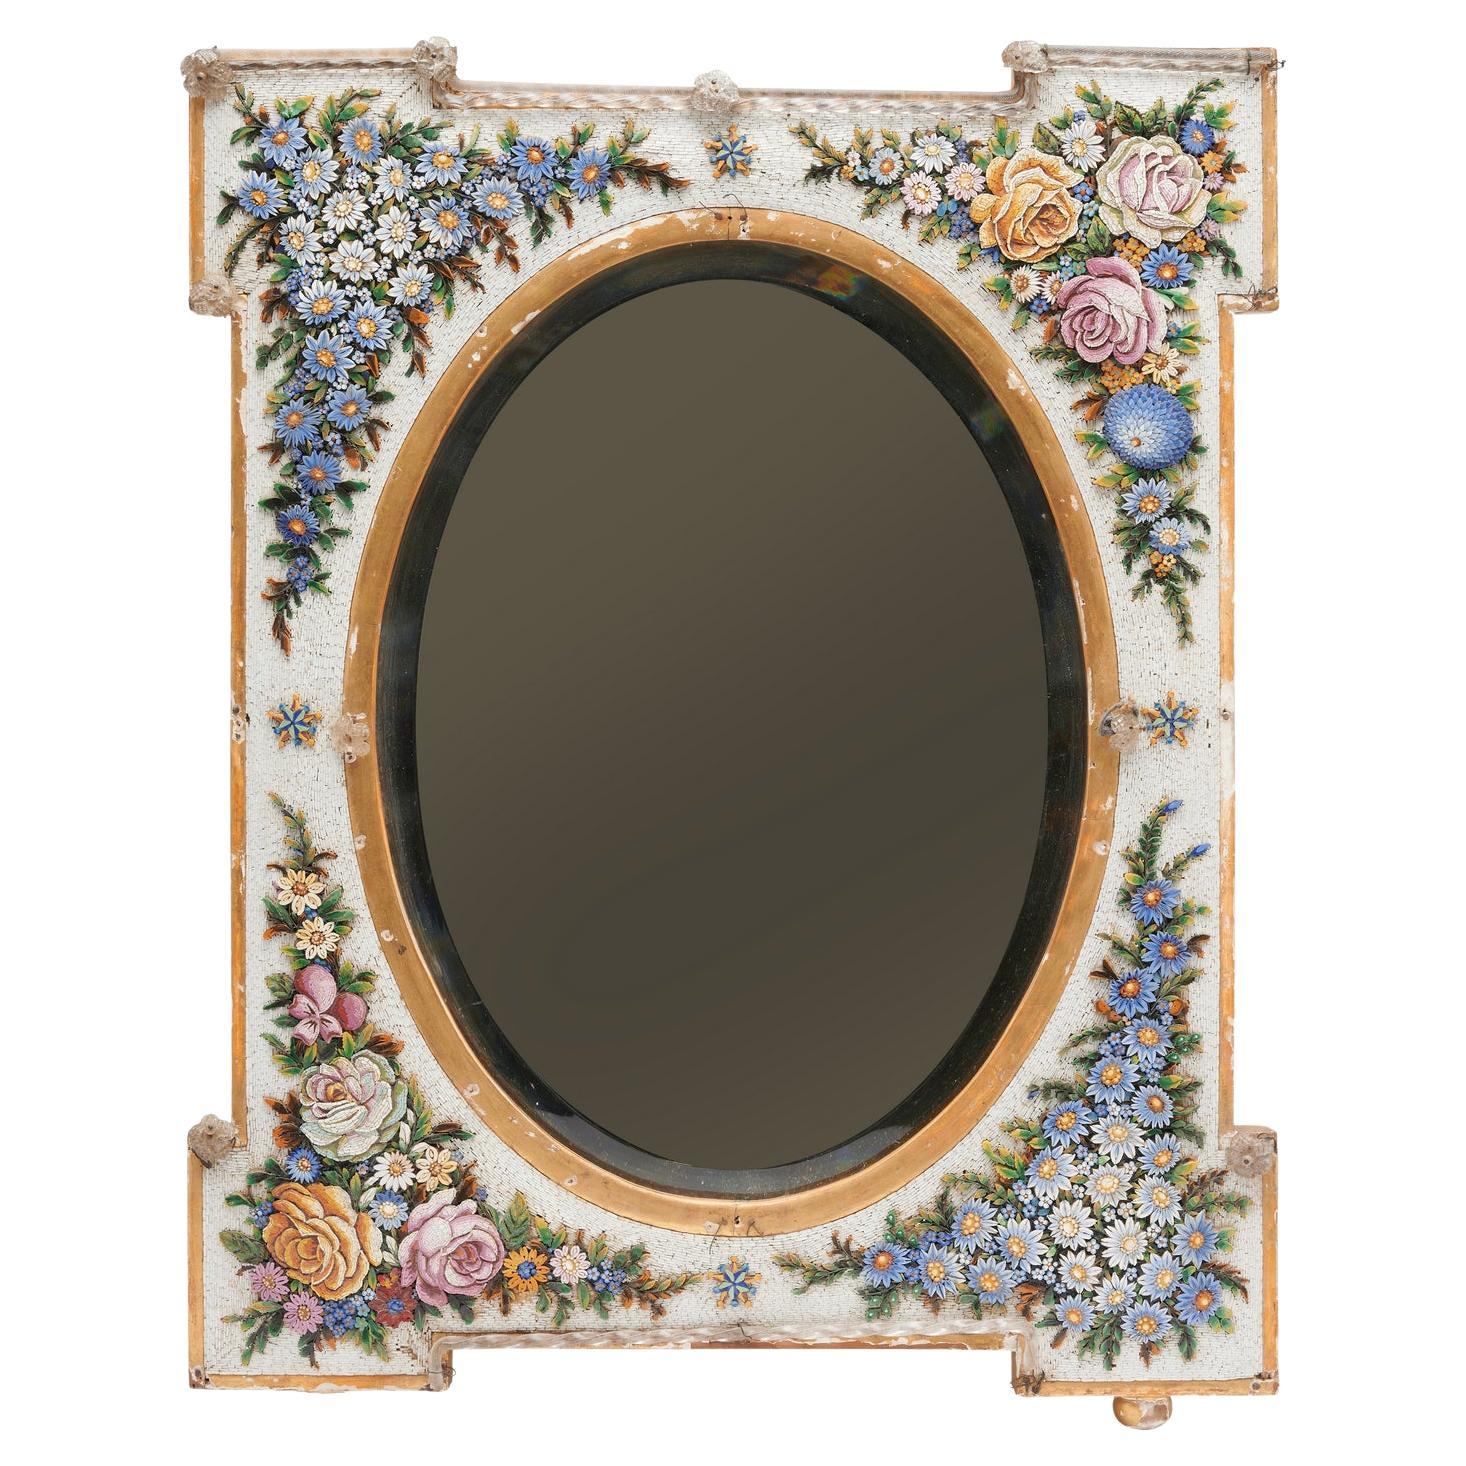 A Venetian Micromosaic-Framed Mirror, Late 19th century